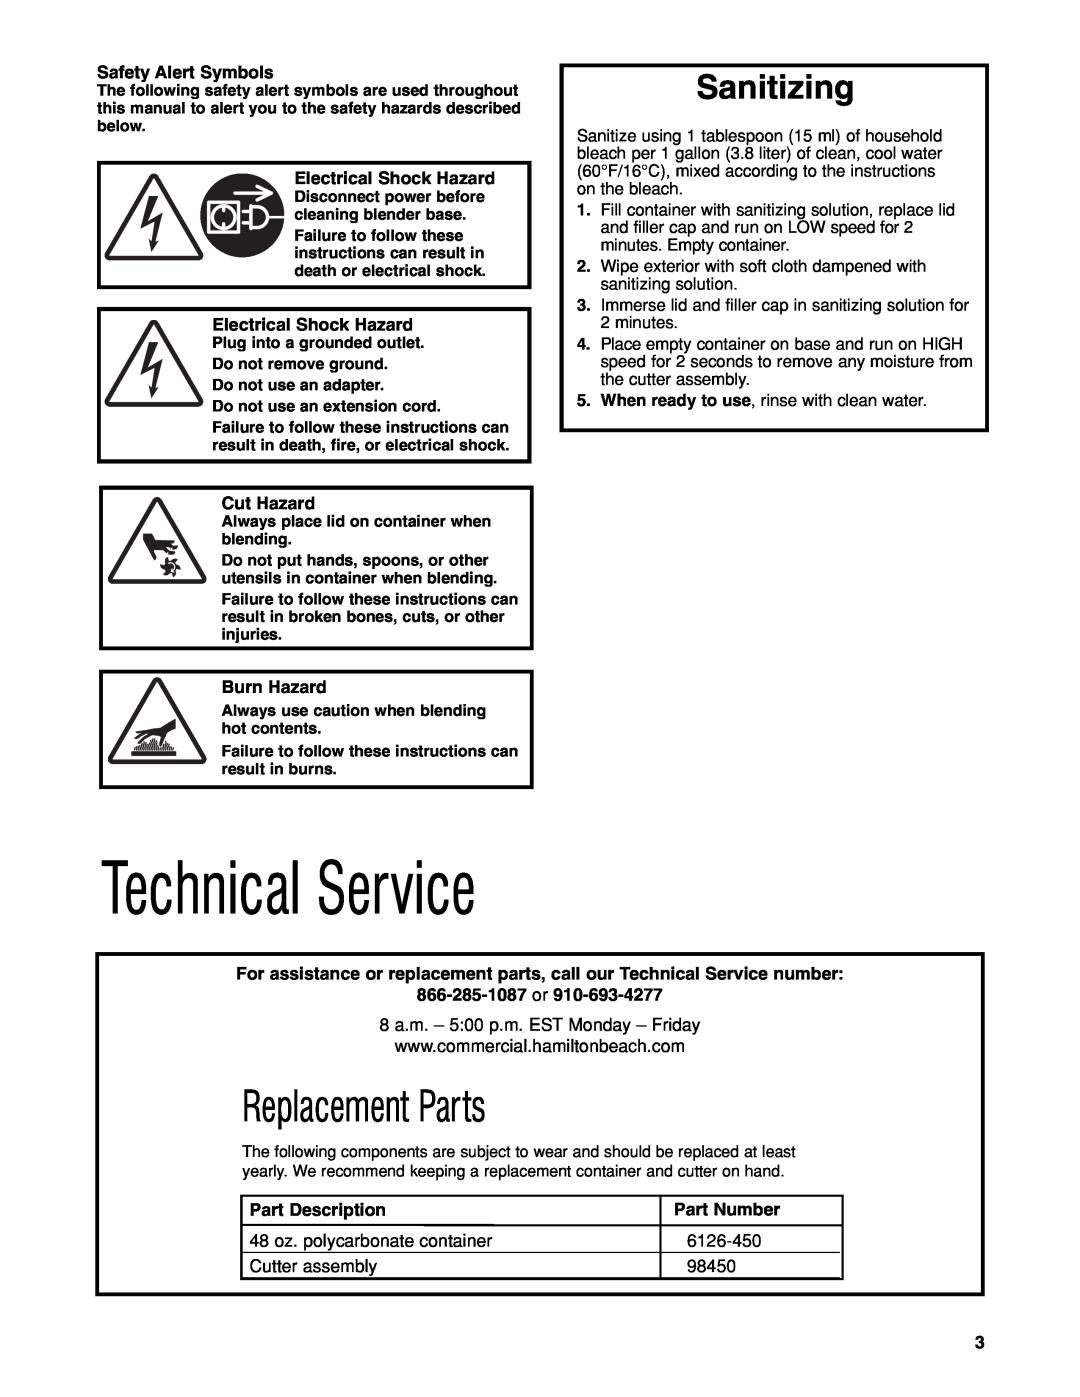 Hamilton Beach HBH450 Technical Service, Replacement Parts, Sanitizing, Safety Alert Symbols, Electrical Shock Hazard 